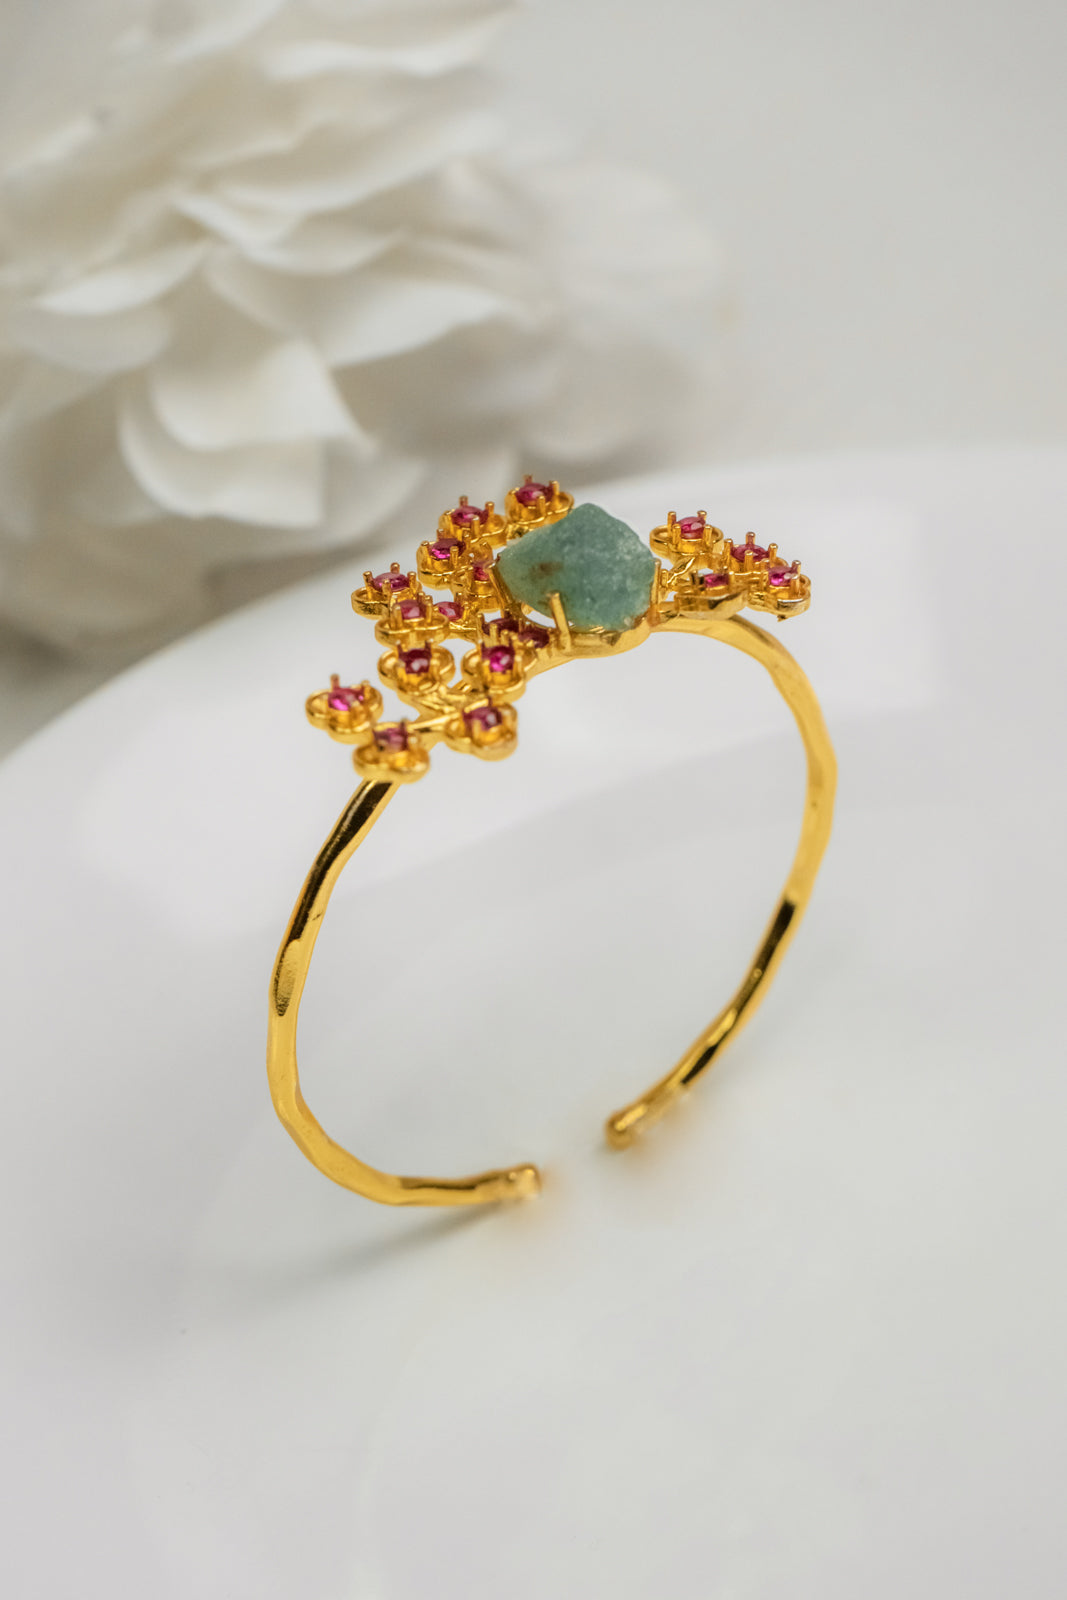 Bloom From Ashes to Elegance bracelet